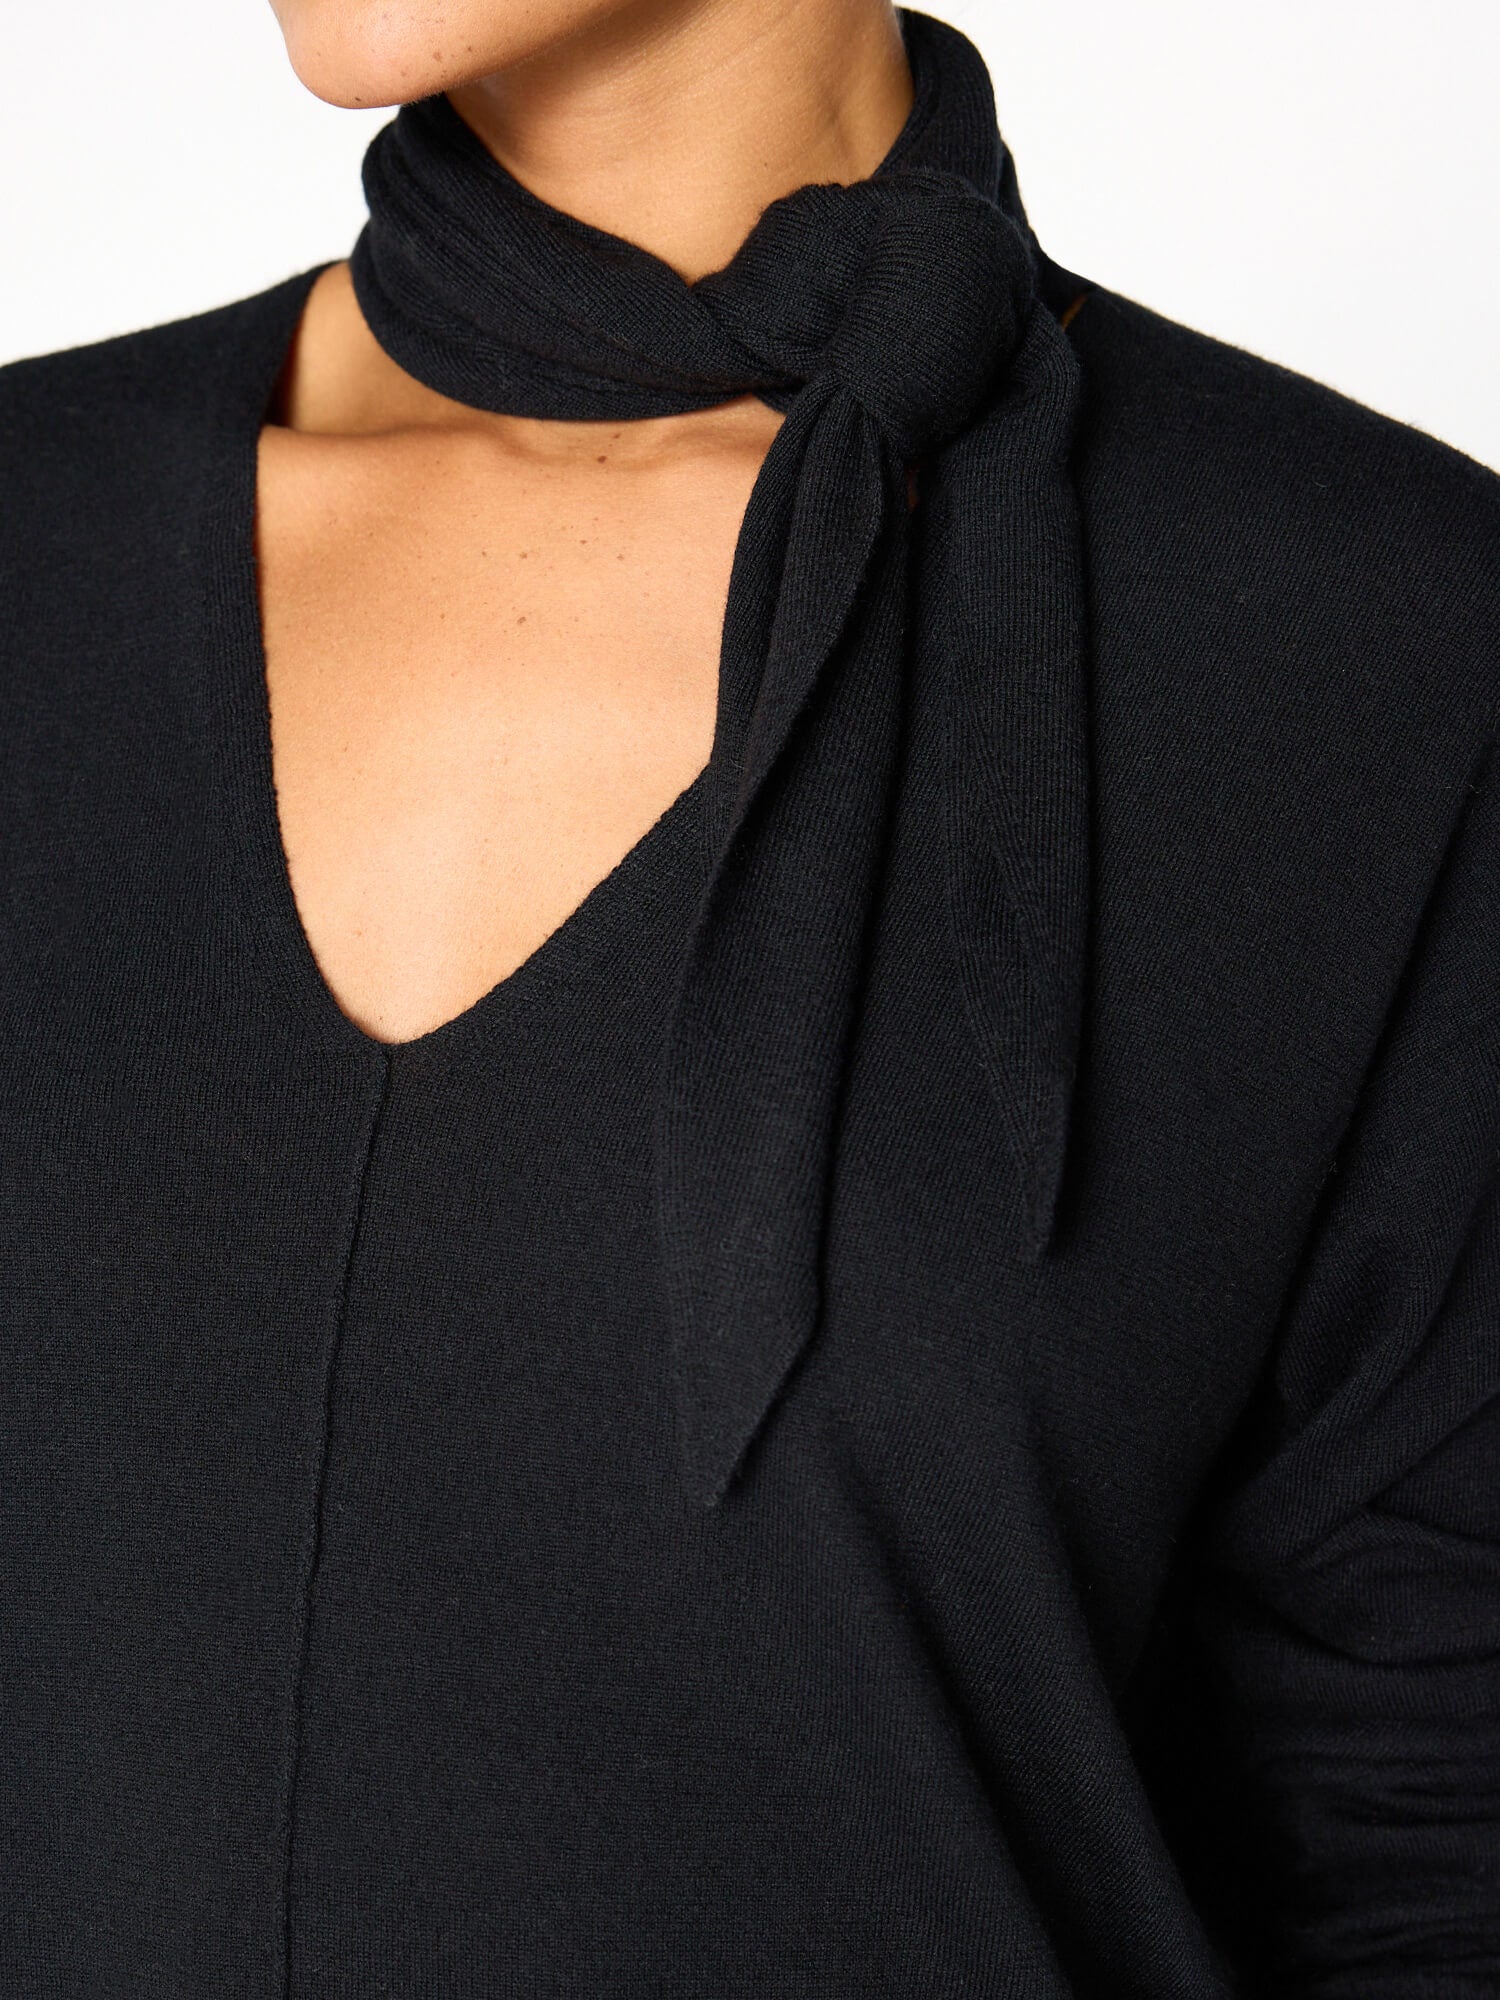 Oren tie neck black v-neck sweater close up